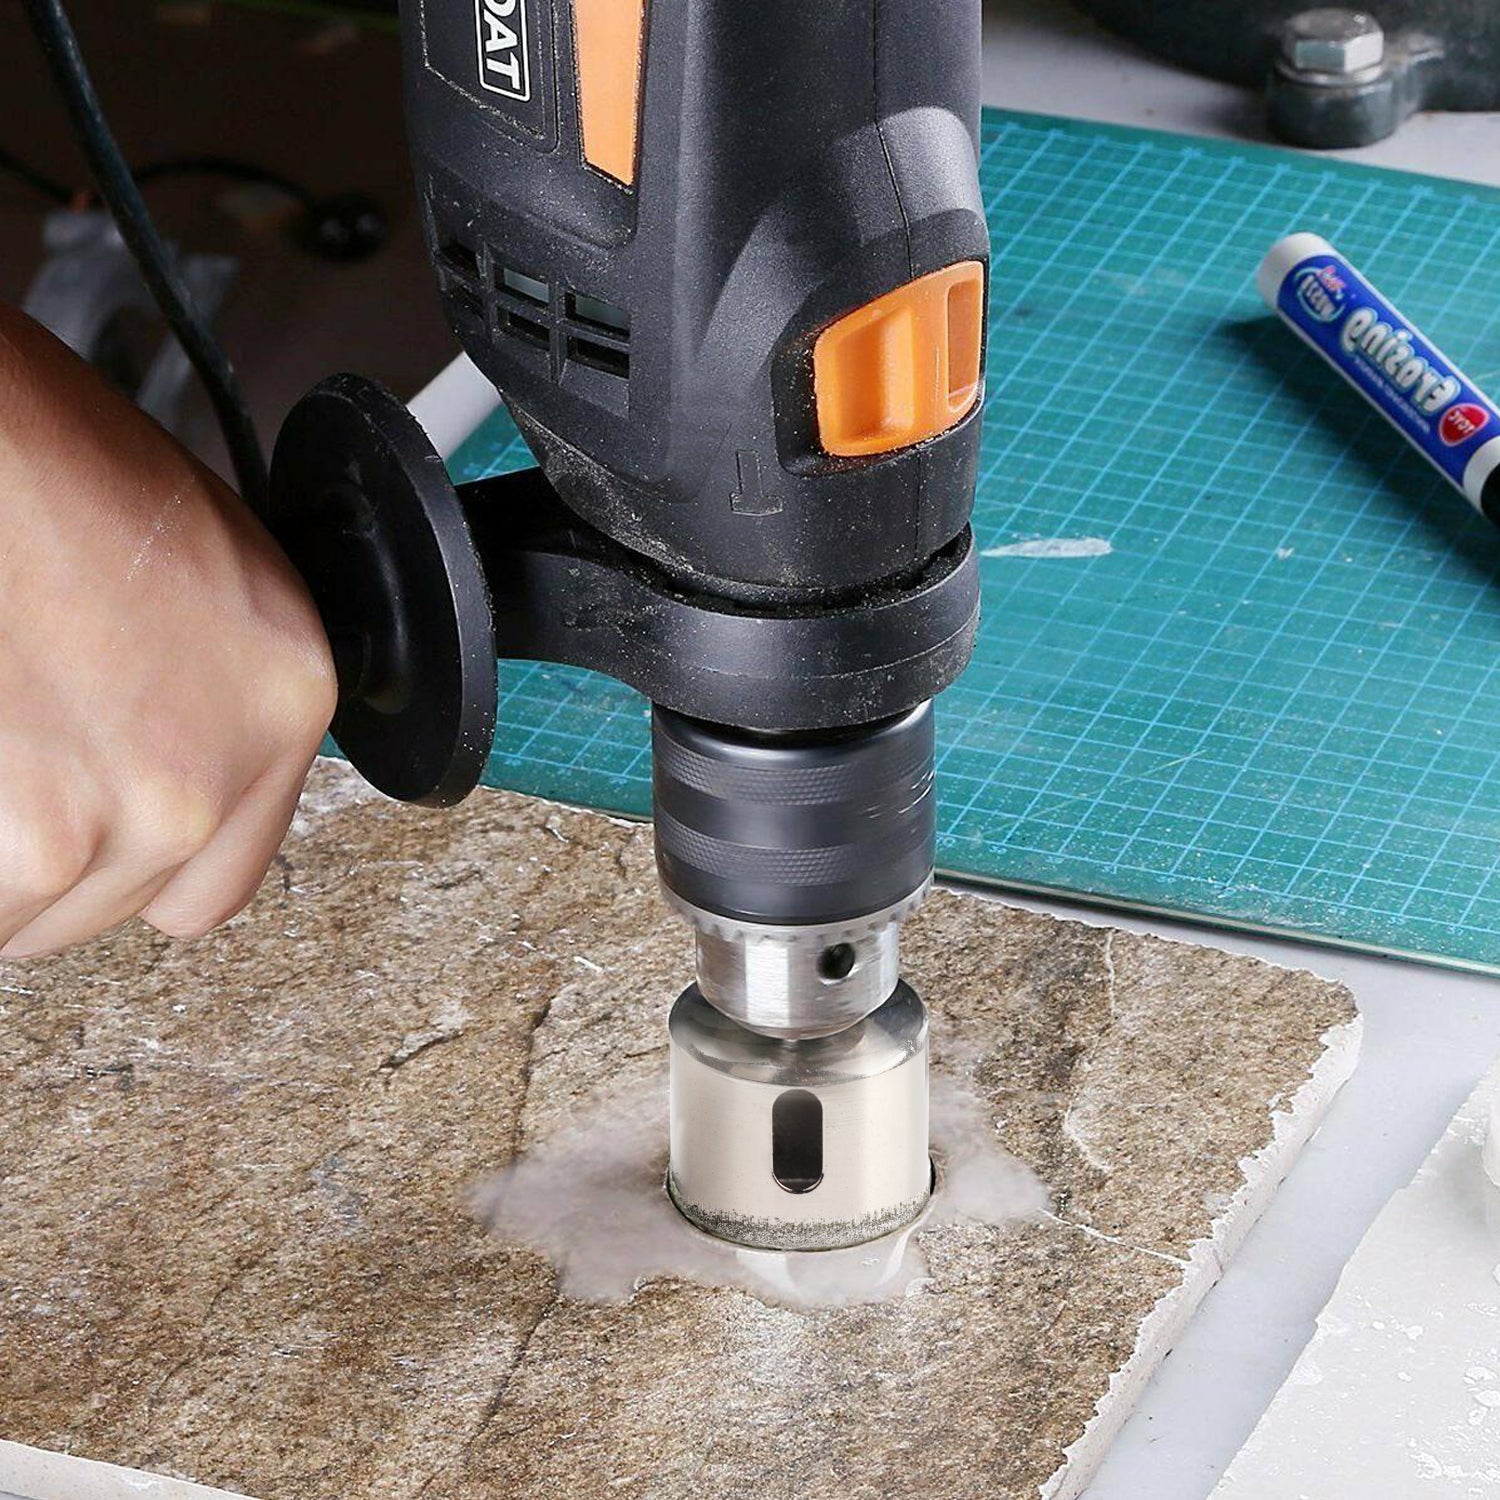 26mm Diamond Hole Saw Kit Tile Drill Bits for Ceramic, Glass, Tile, Porcelain, Marble, Granite